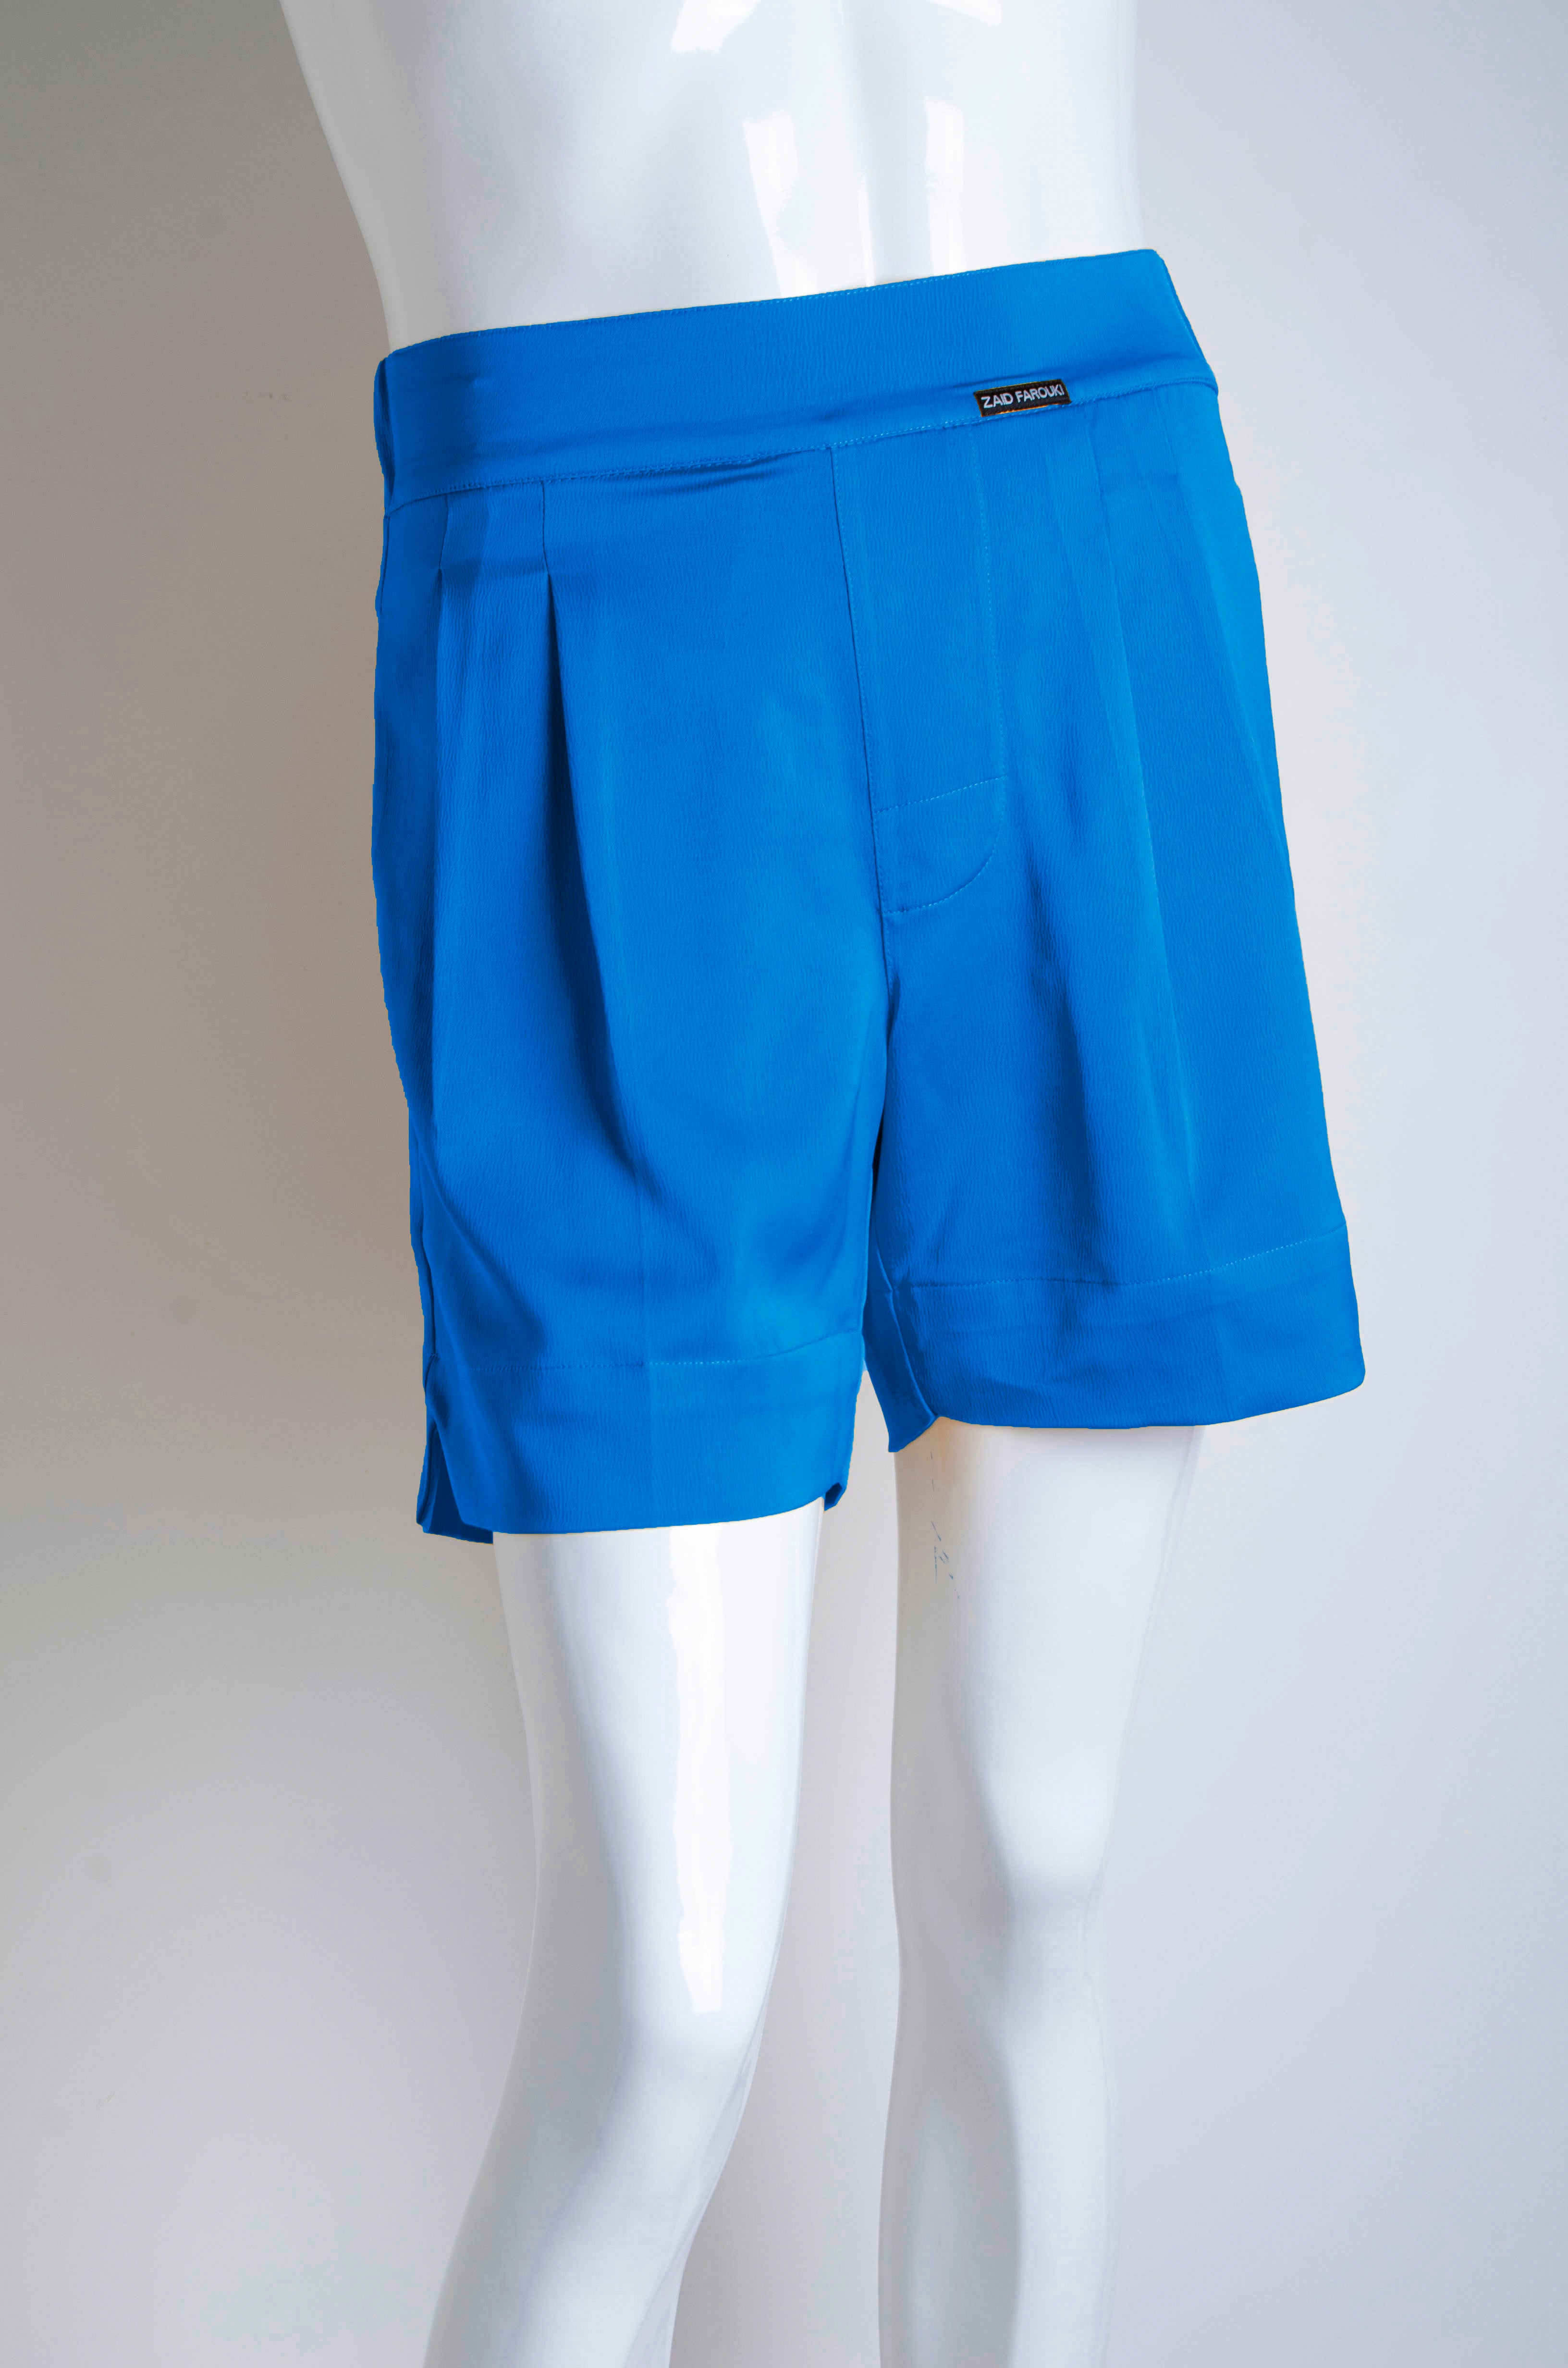 Nile Blue Tailored Shorts